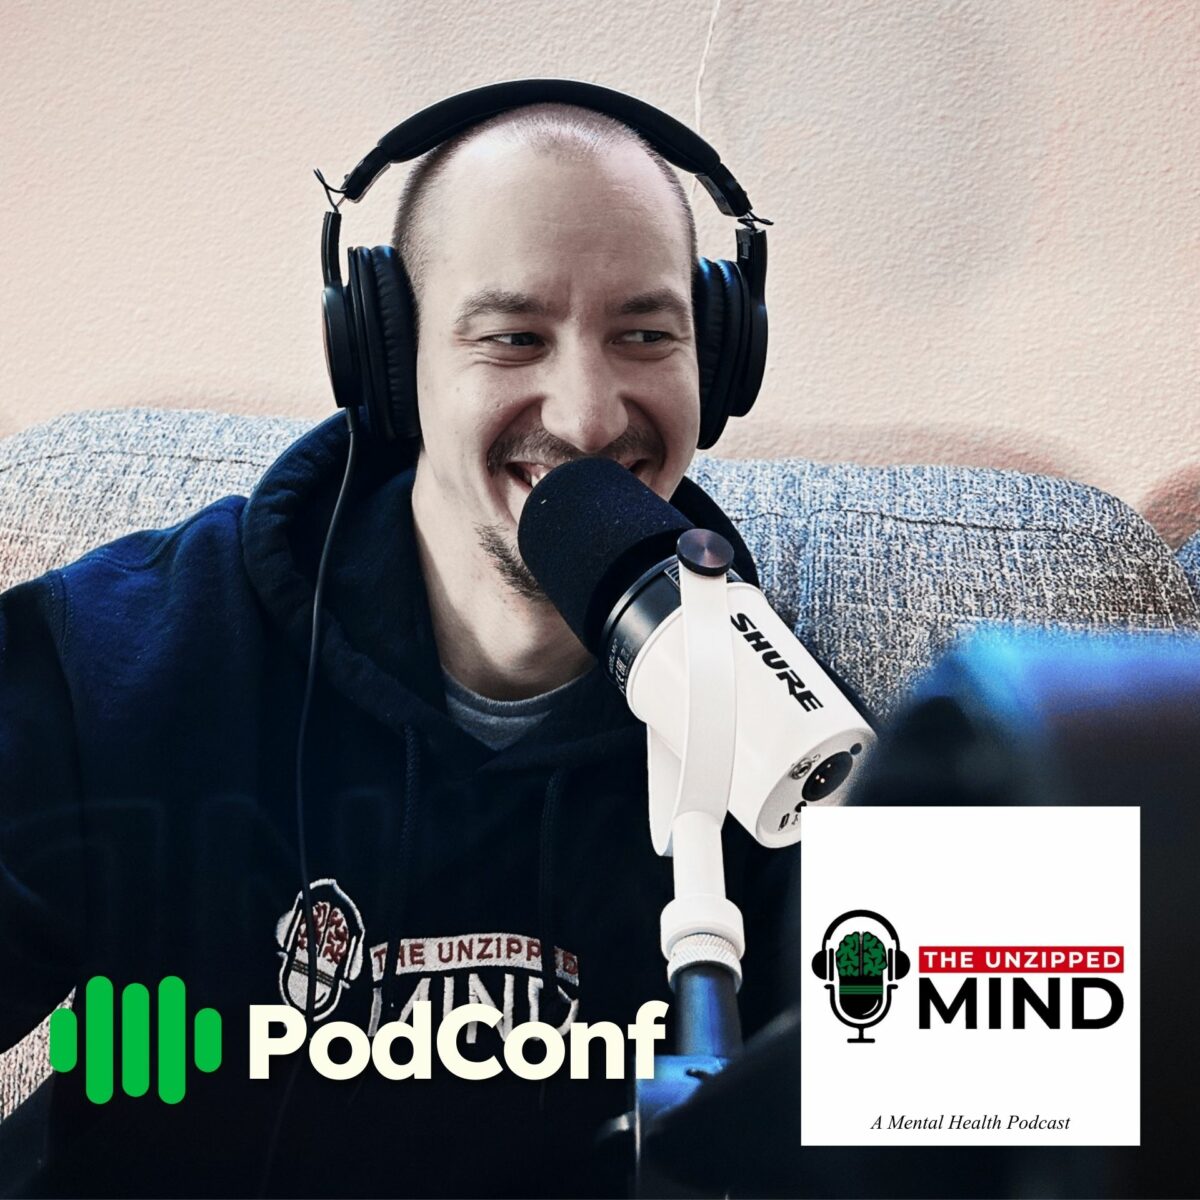 Nick Smith/ The Unzipped Mind / PodConf